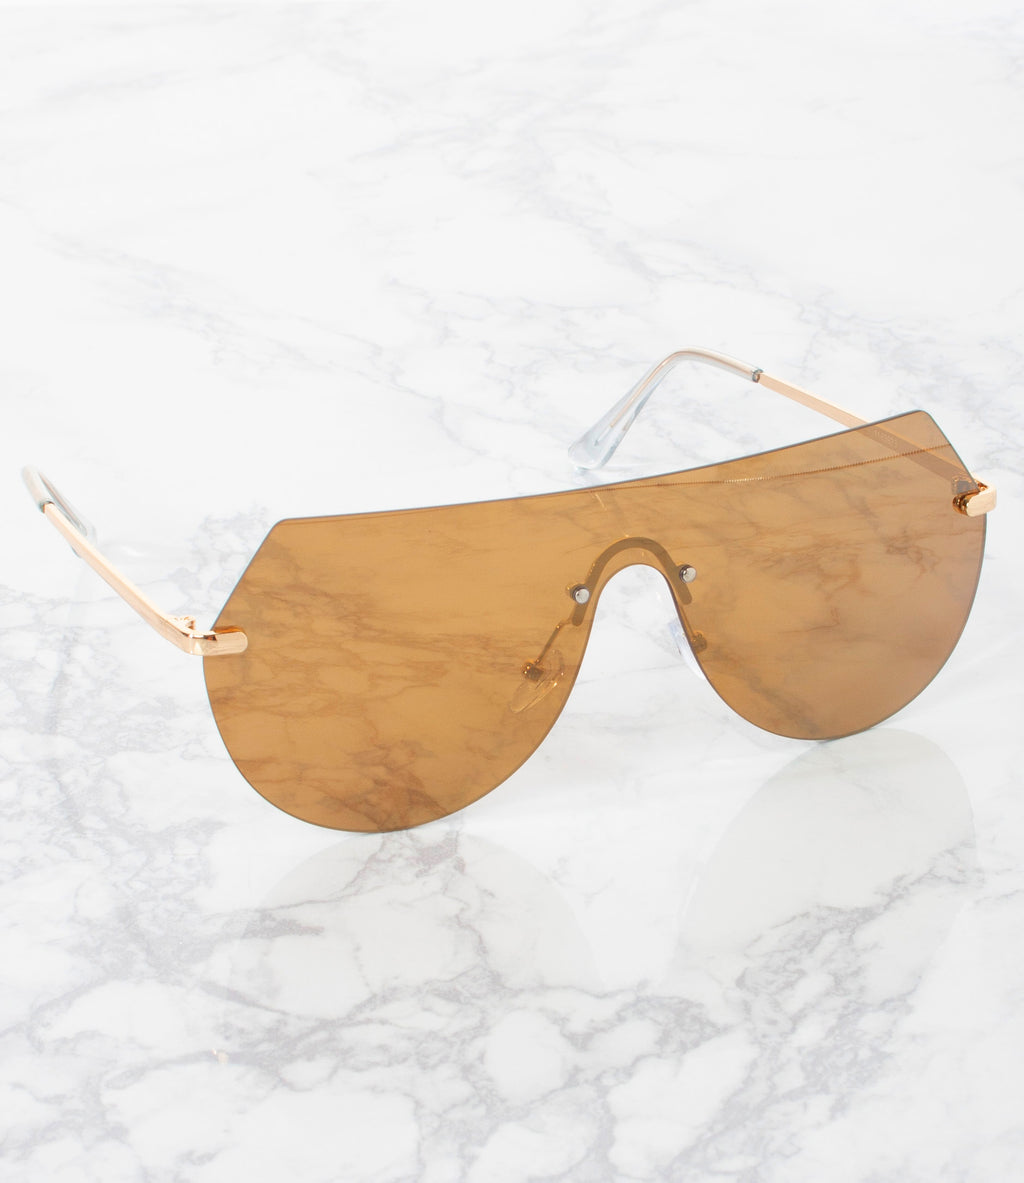 Single Color Sunglasses - 1163923-BRONZE - Pack of 6 - $4.00/piece